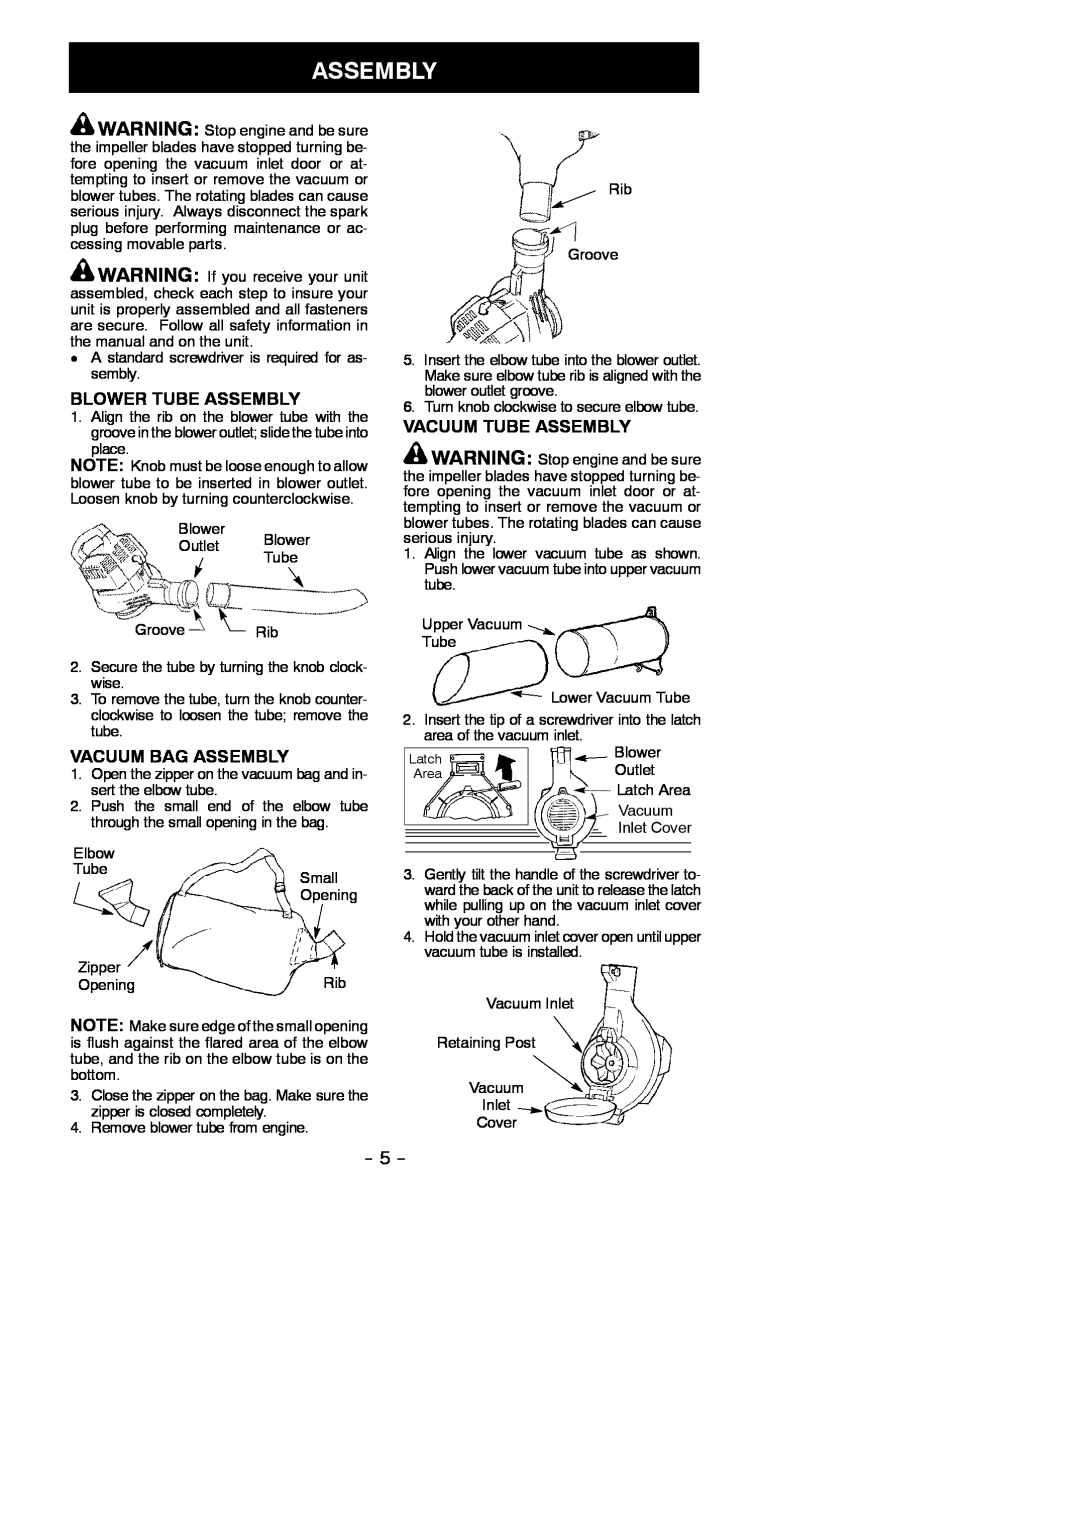 Poulan 545137216 instruction manual Blower Tube Assembly, Vacuum Bag Assembly, Vacuum Tube Assembly 